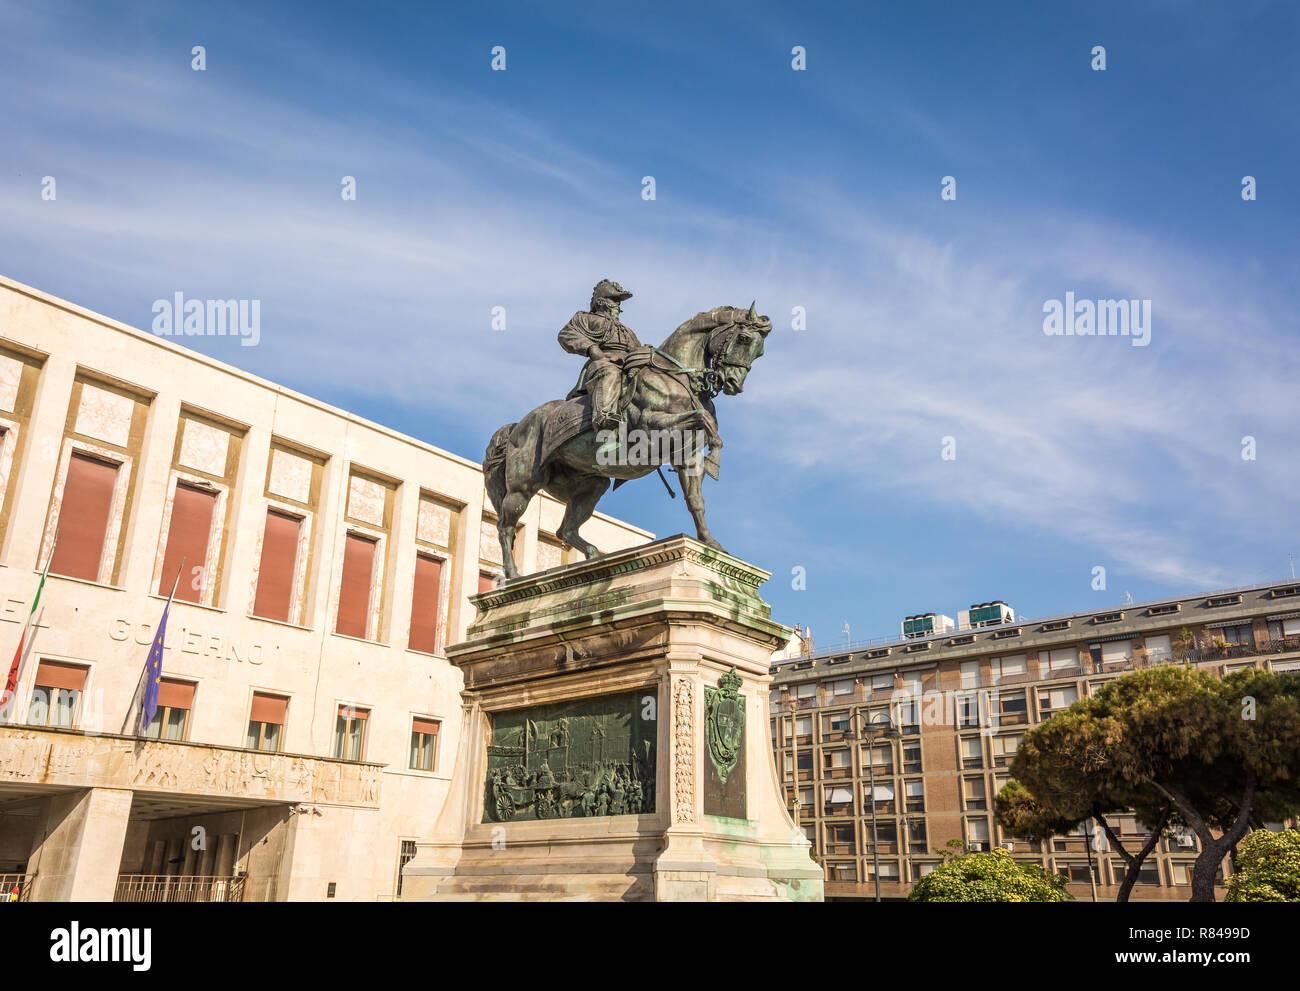 Equestrian statue of Vittorio Emanuele II by Augusto Rivalta in the square of Livorno city, Tuscany, Italy Stock Photo